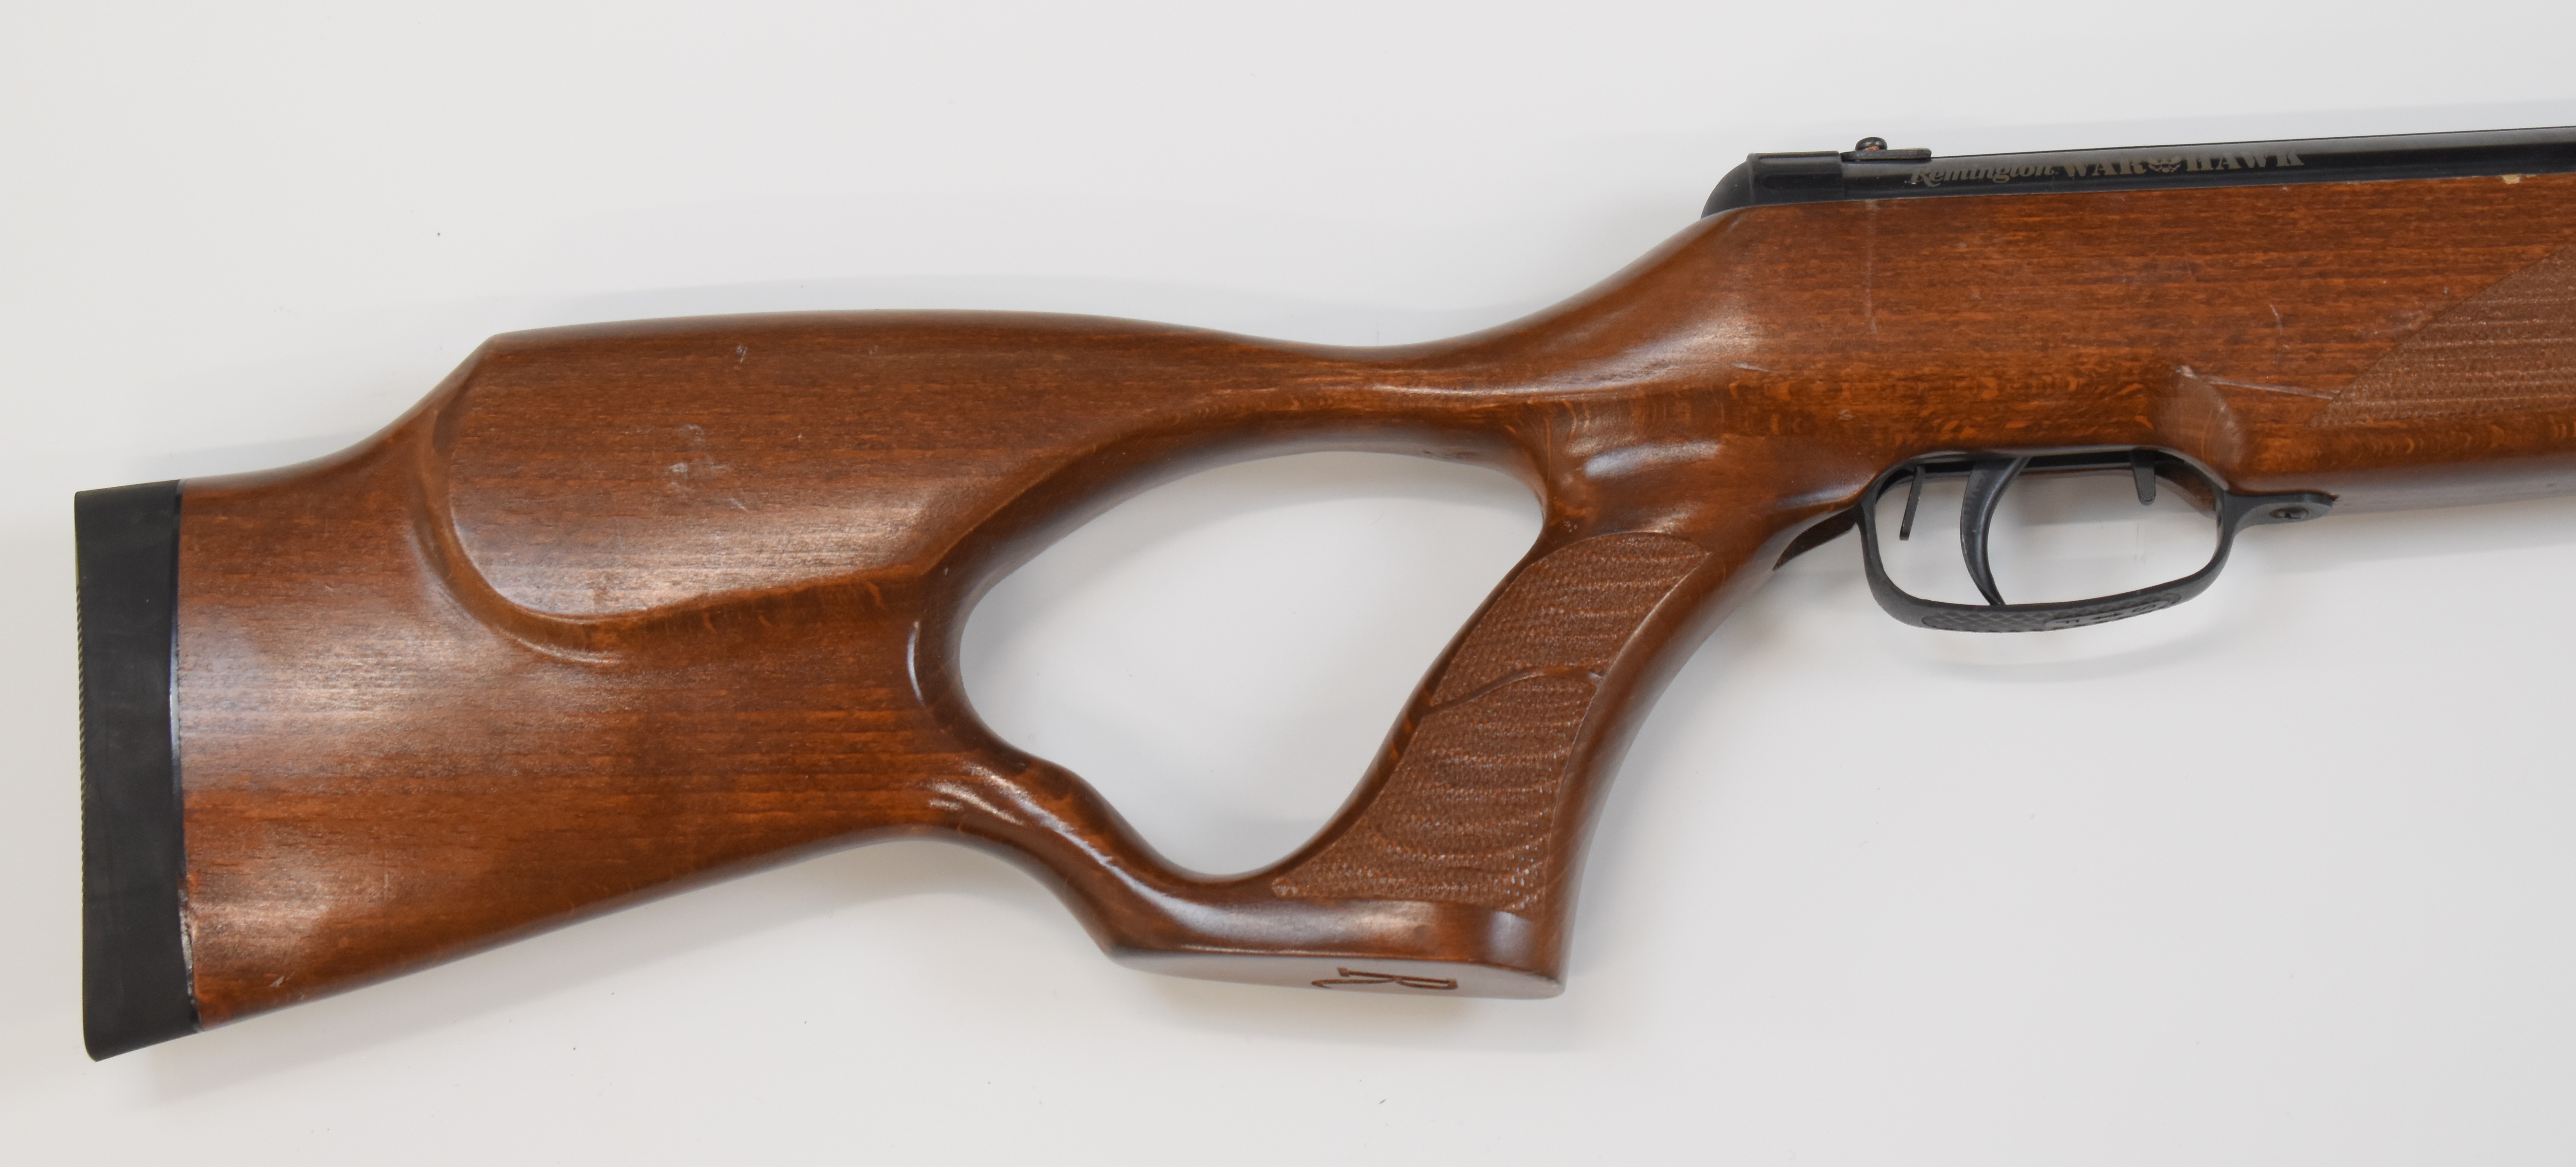 Remington Warhawk .177 under-lever air rifle with textured semi-pistol grip, raised cheek piece - Image 3 of 11